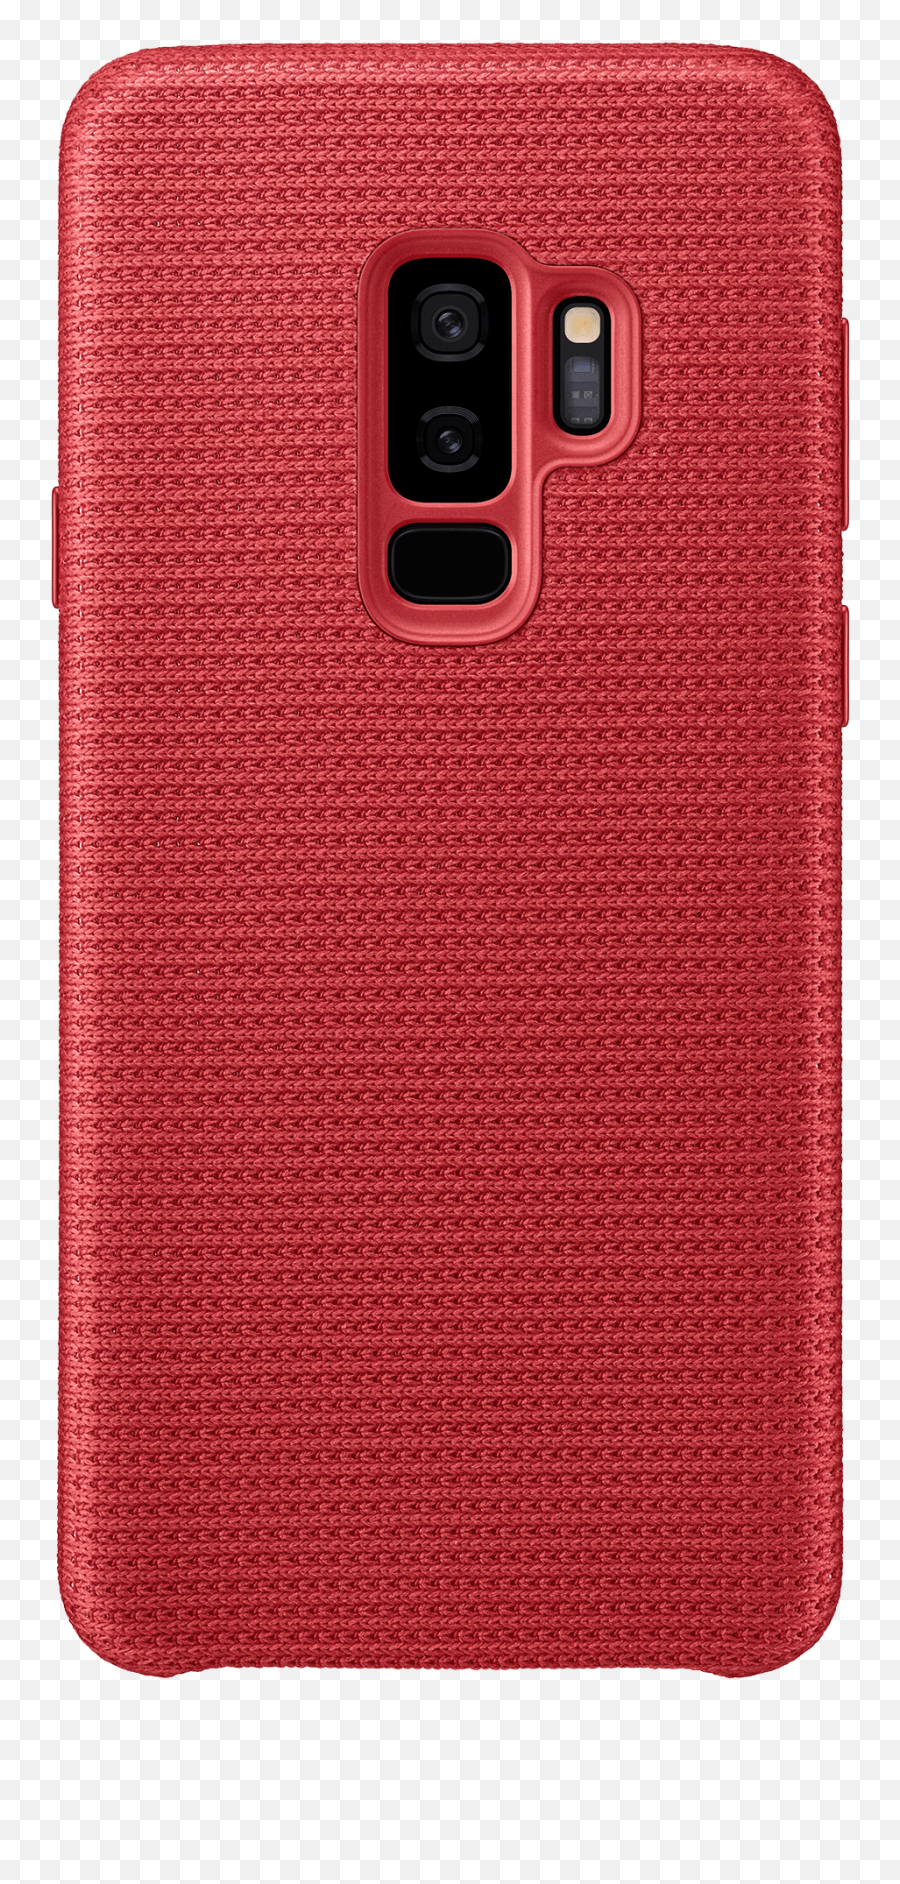 Galaxy S9 Plus Cases Red - Walmartcom Ahsan Manzil Png,Samsung Galaxy S4 Headphone Icon